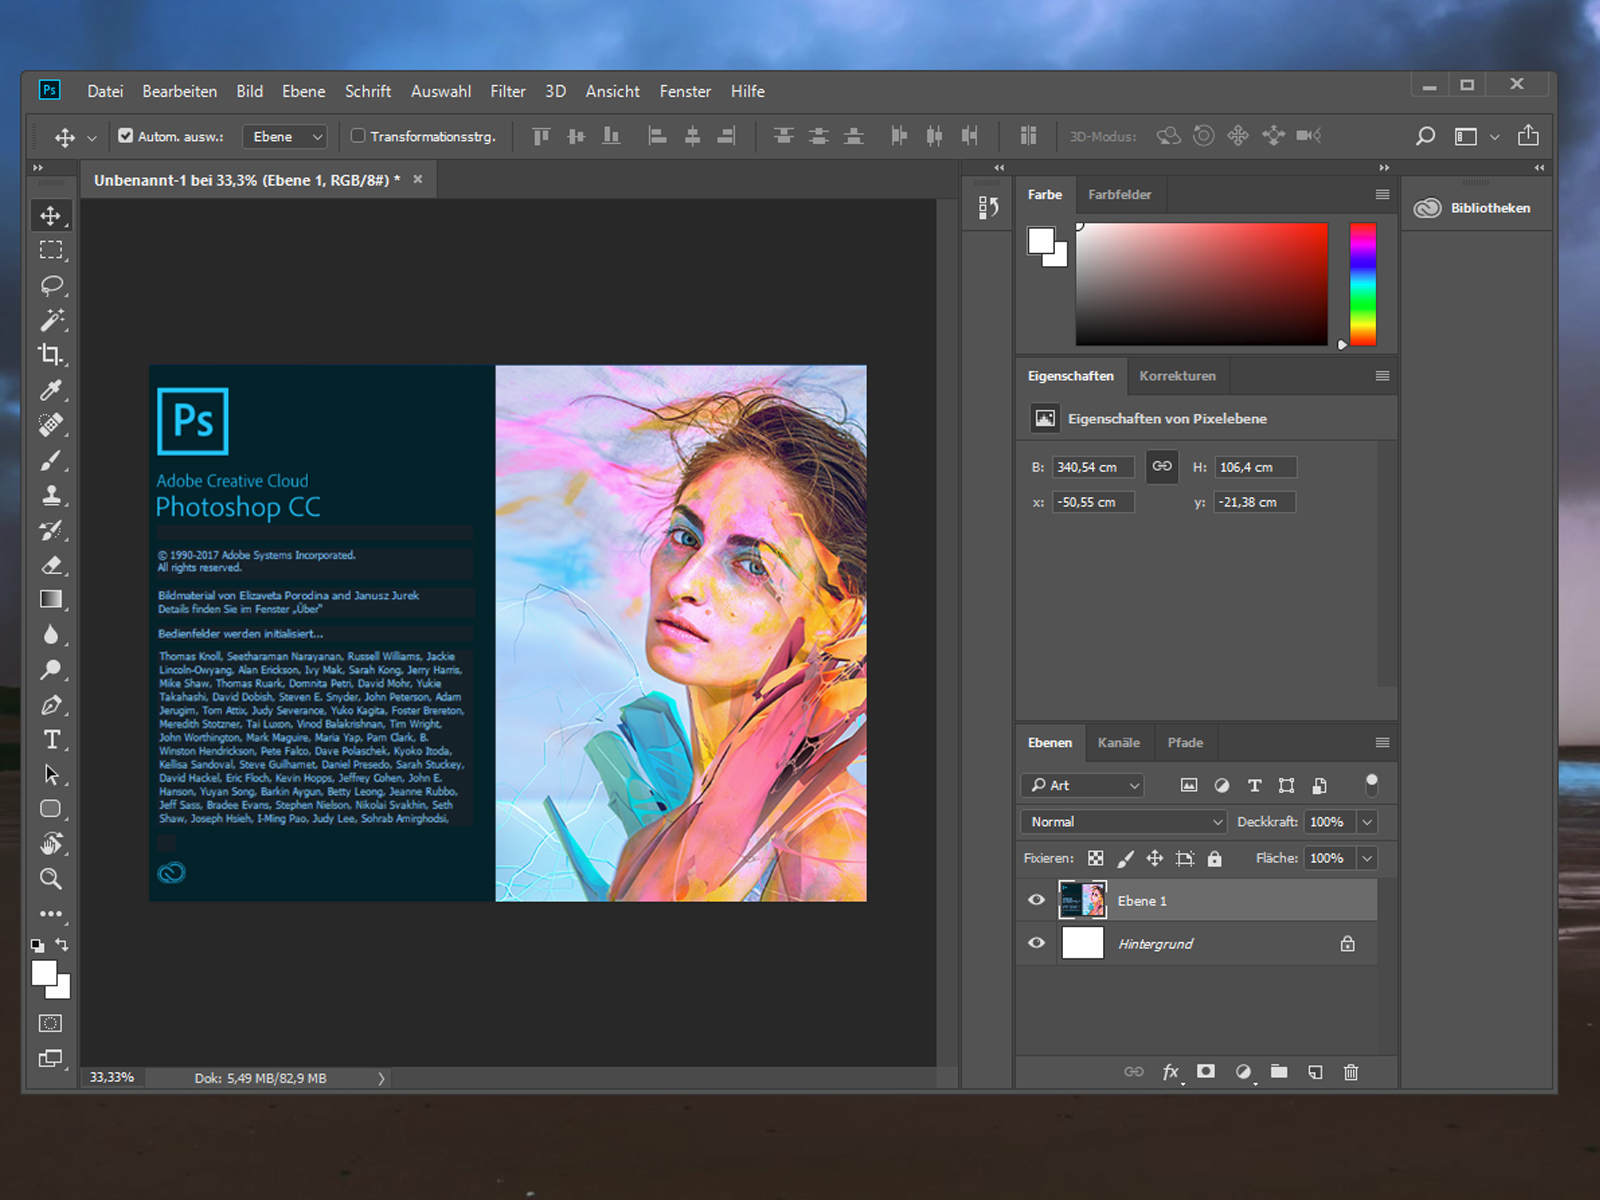 Adobe Photoshop Cc 2018 Crack For Mac Os X